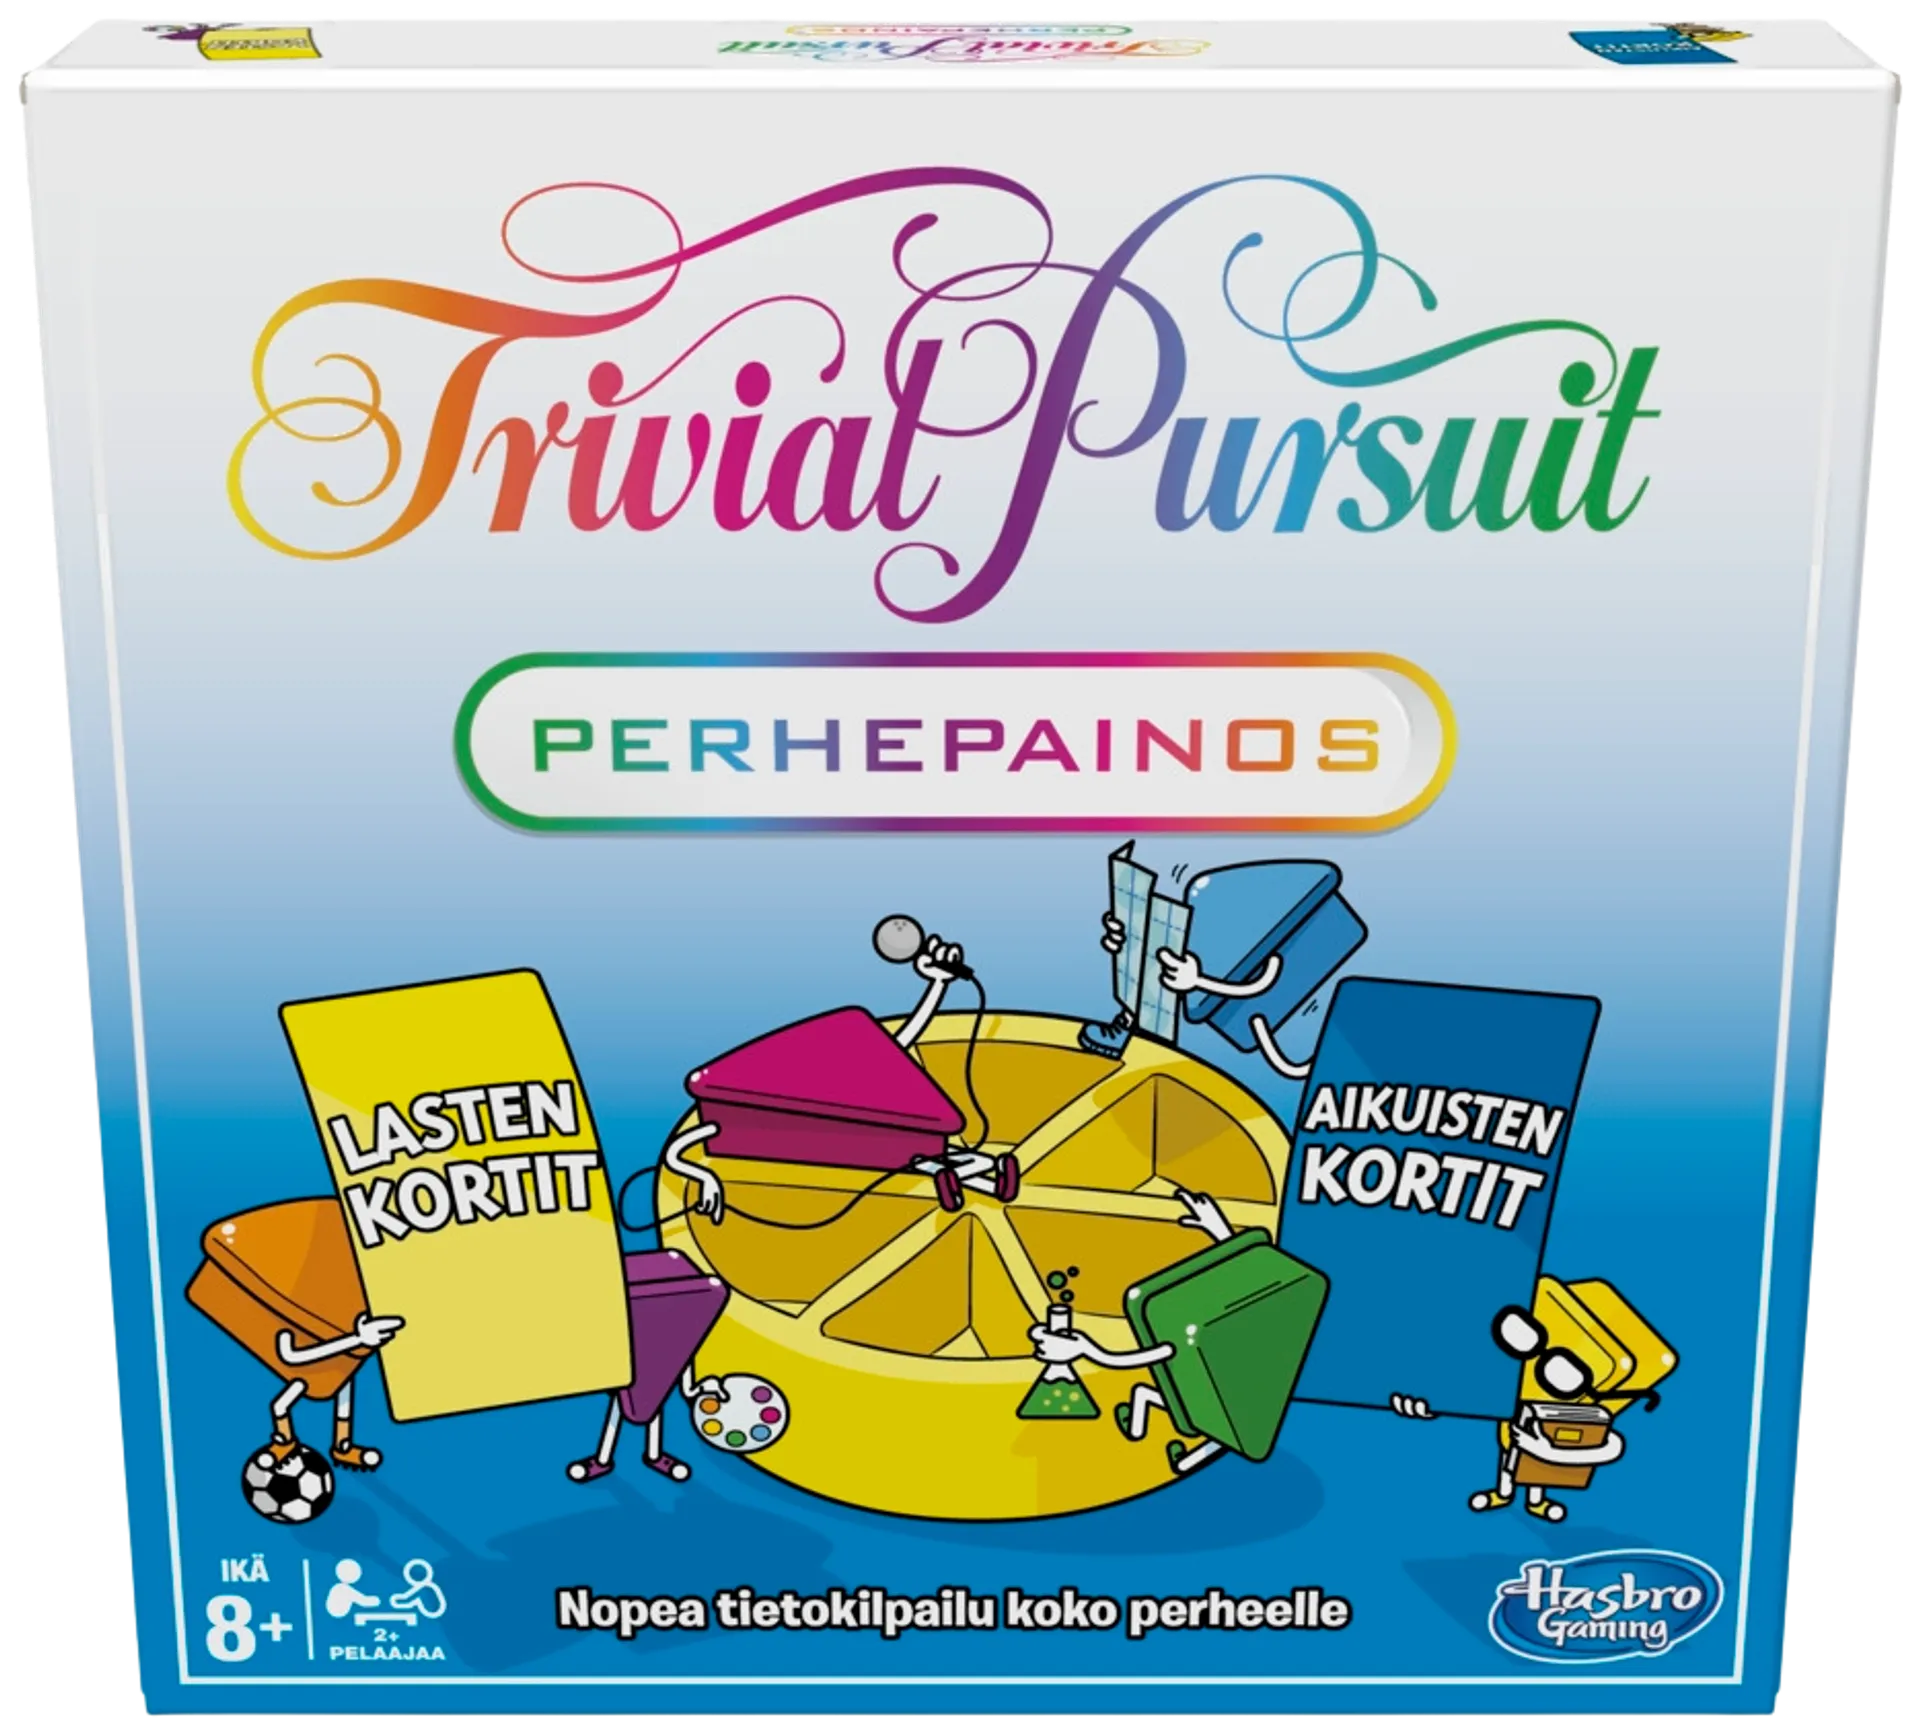 Hasbro lautapeli Trivial Pursuit perhepainos - 1